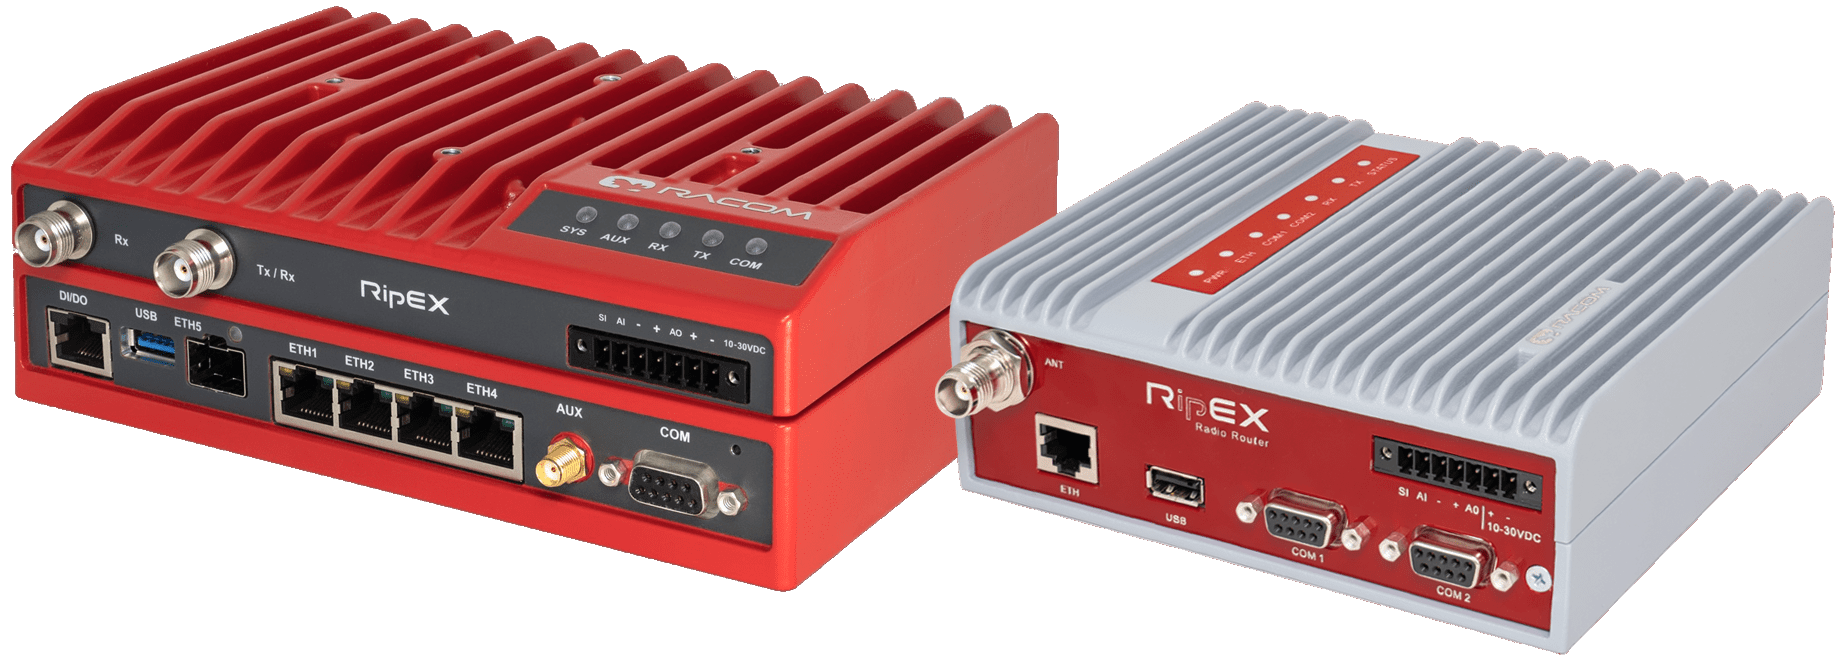 modem RipEX | RACOM